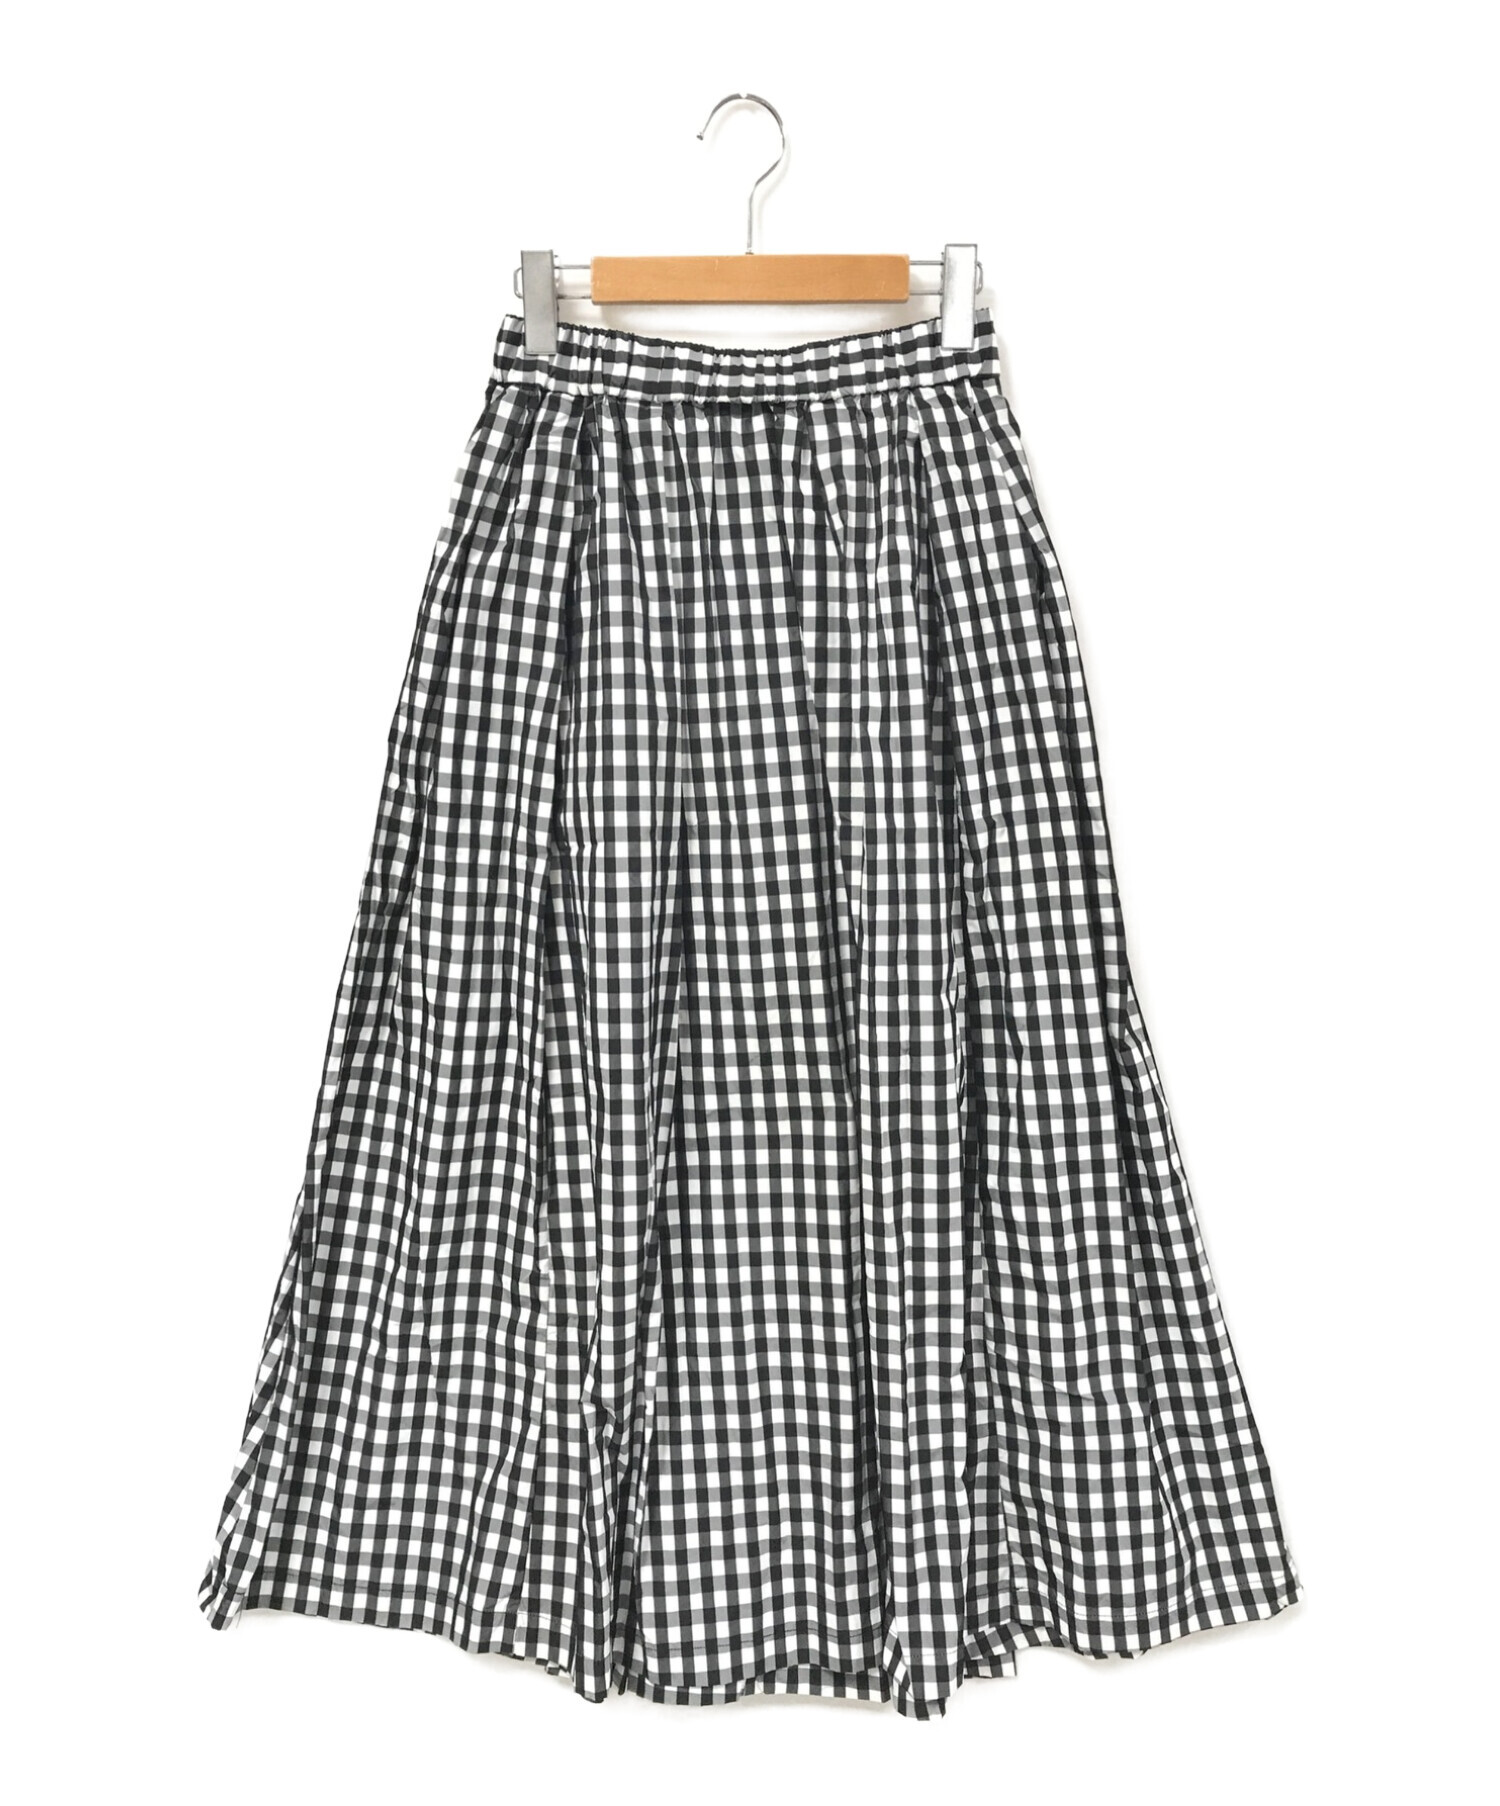 BEARDSLEY (ビアズリー) タフタギャザースカート/ロングスカート/チェック柄 ブラック×ホワイト サイズ:F